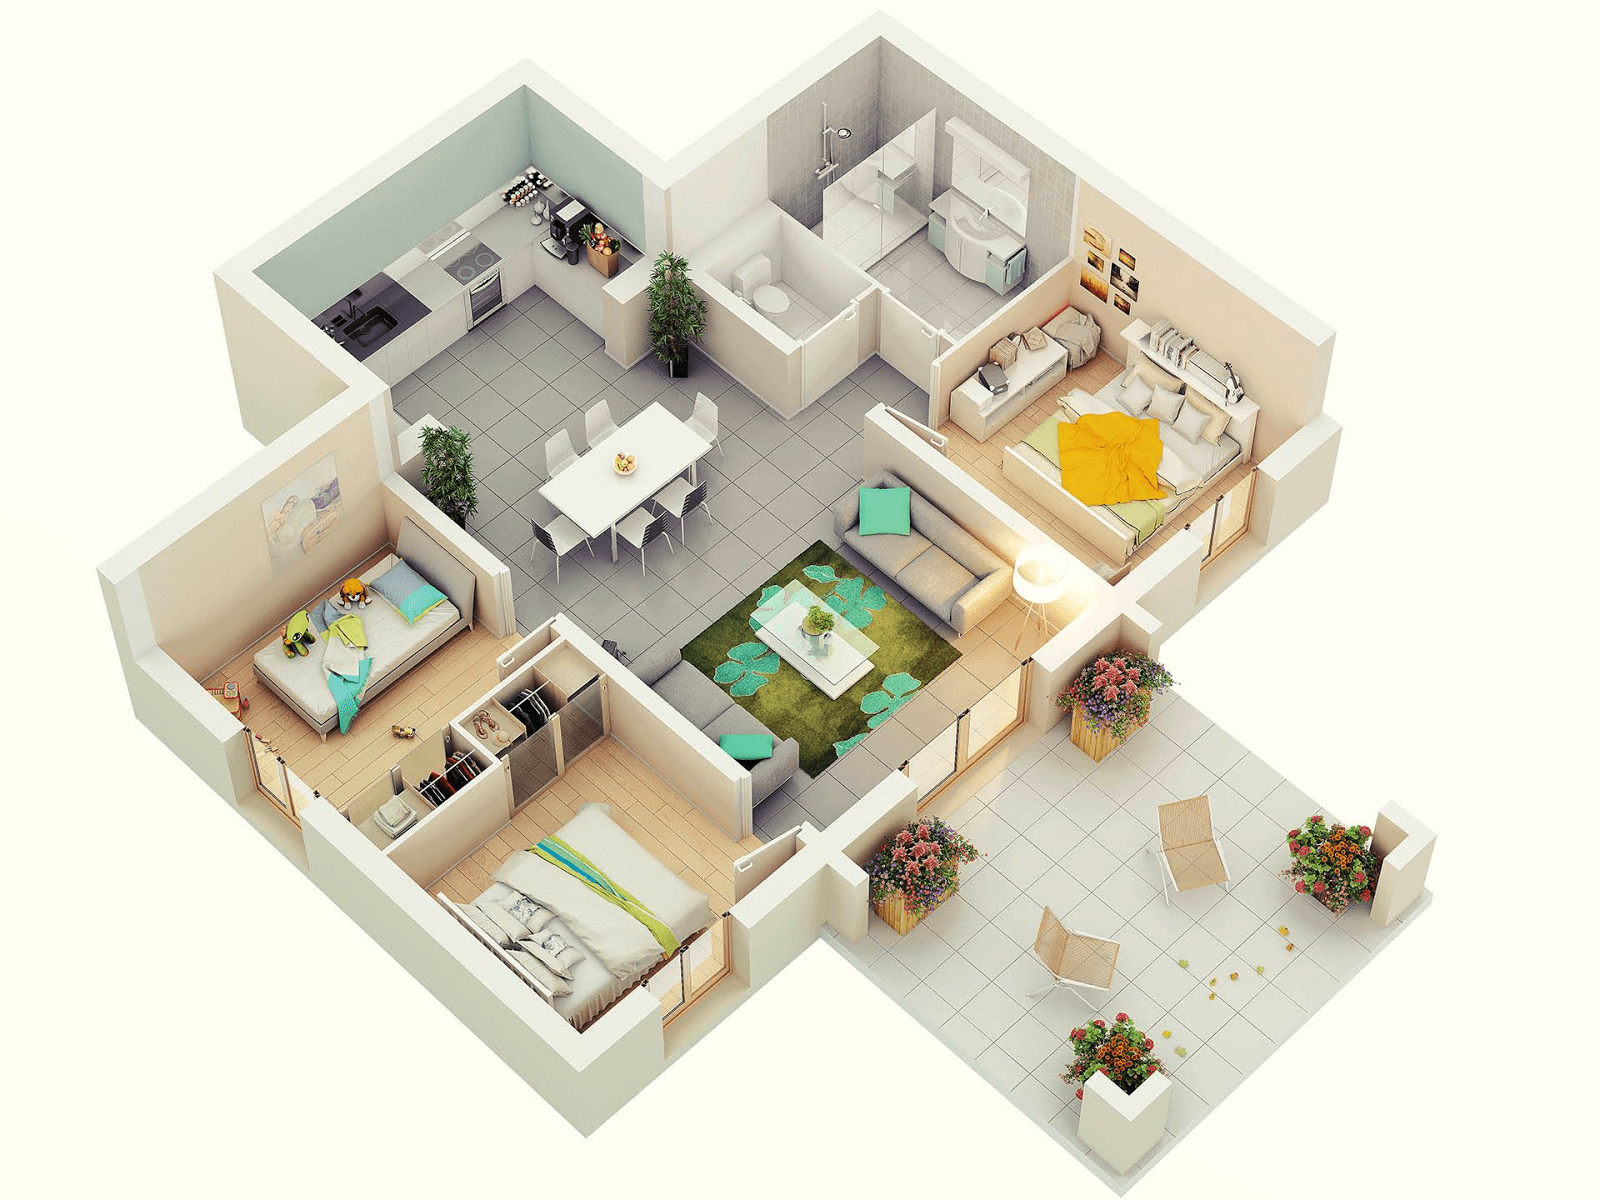 3 Bedroom House With Terrace Floor Plans 3D 1200 Sqft (View 11 of 11)